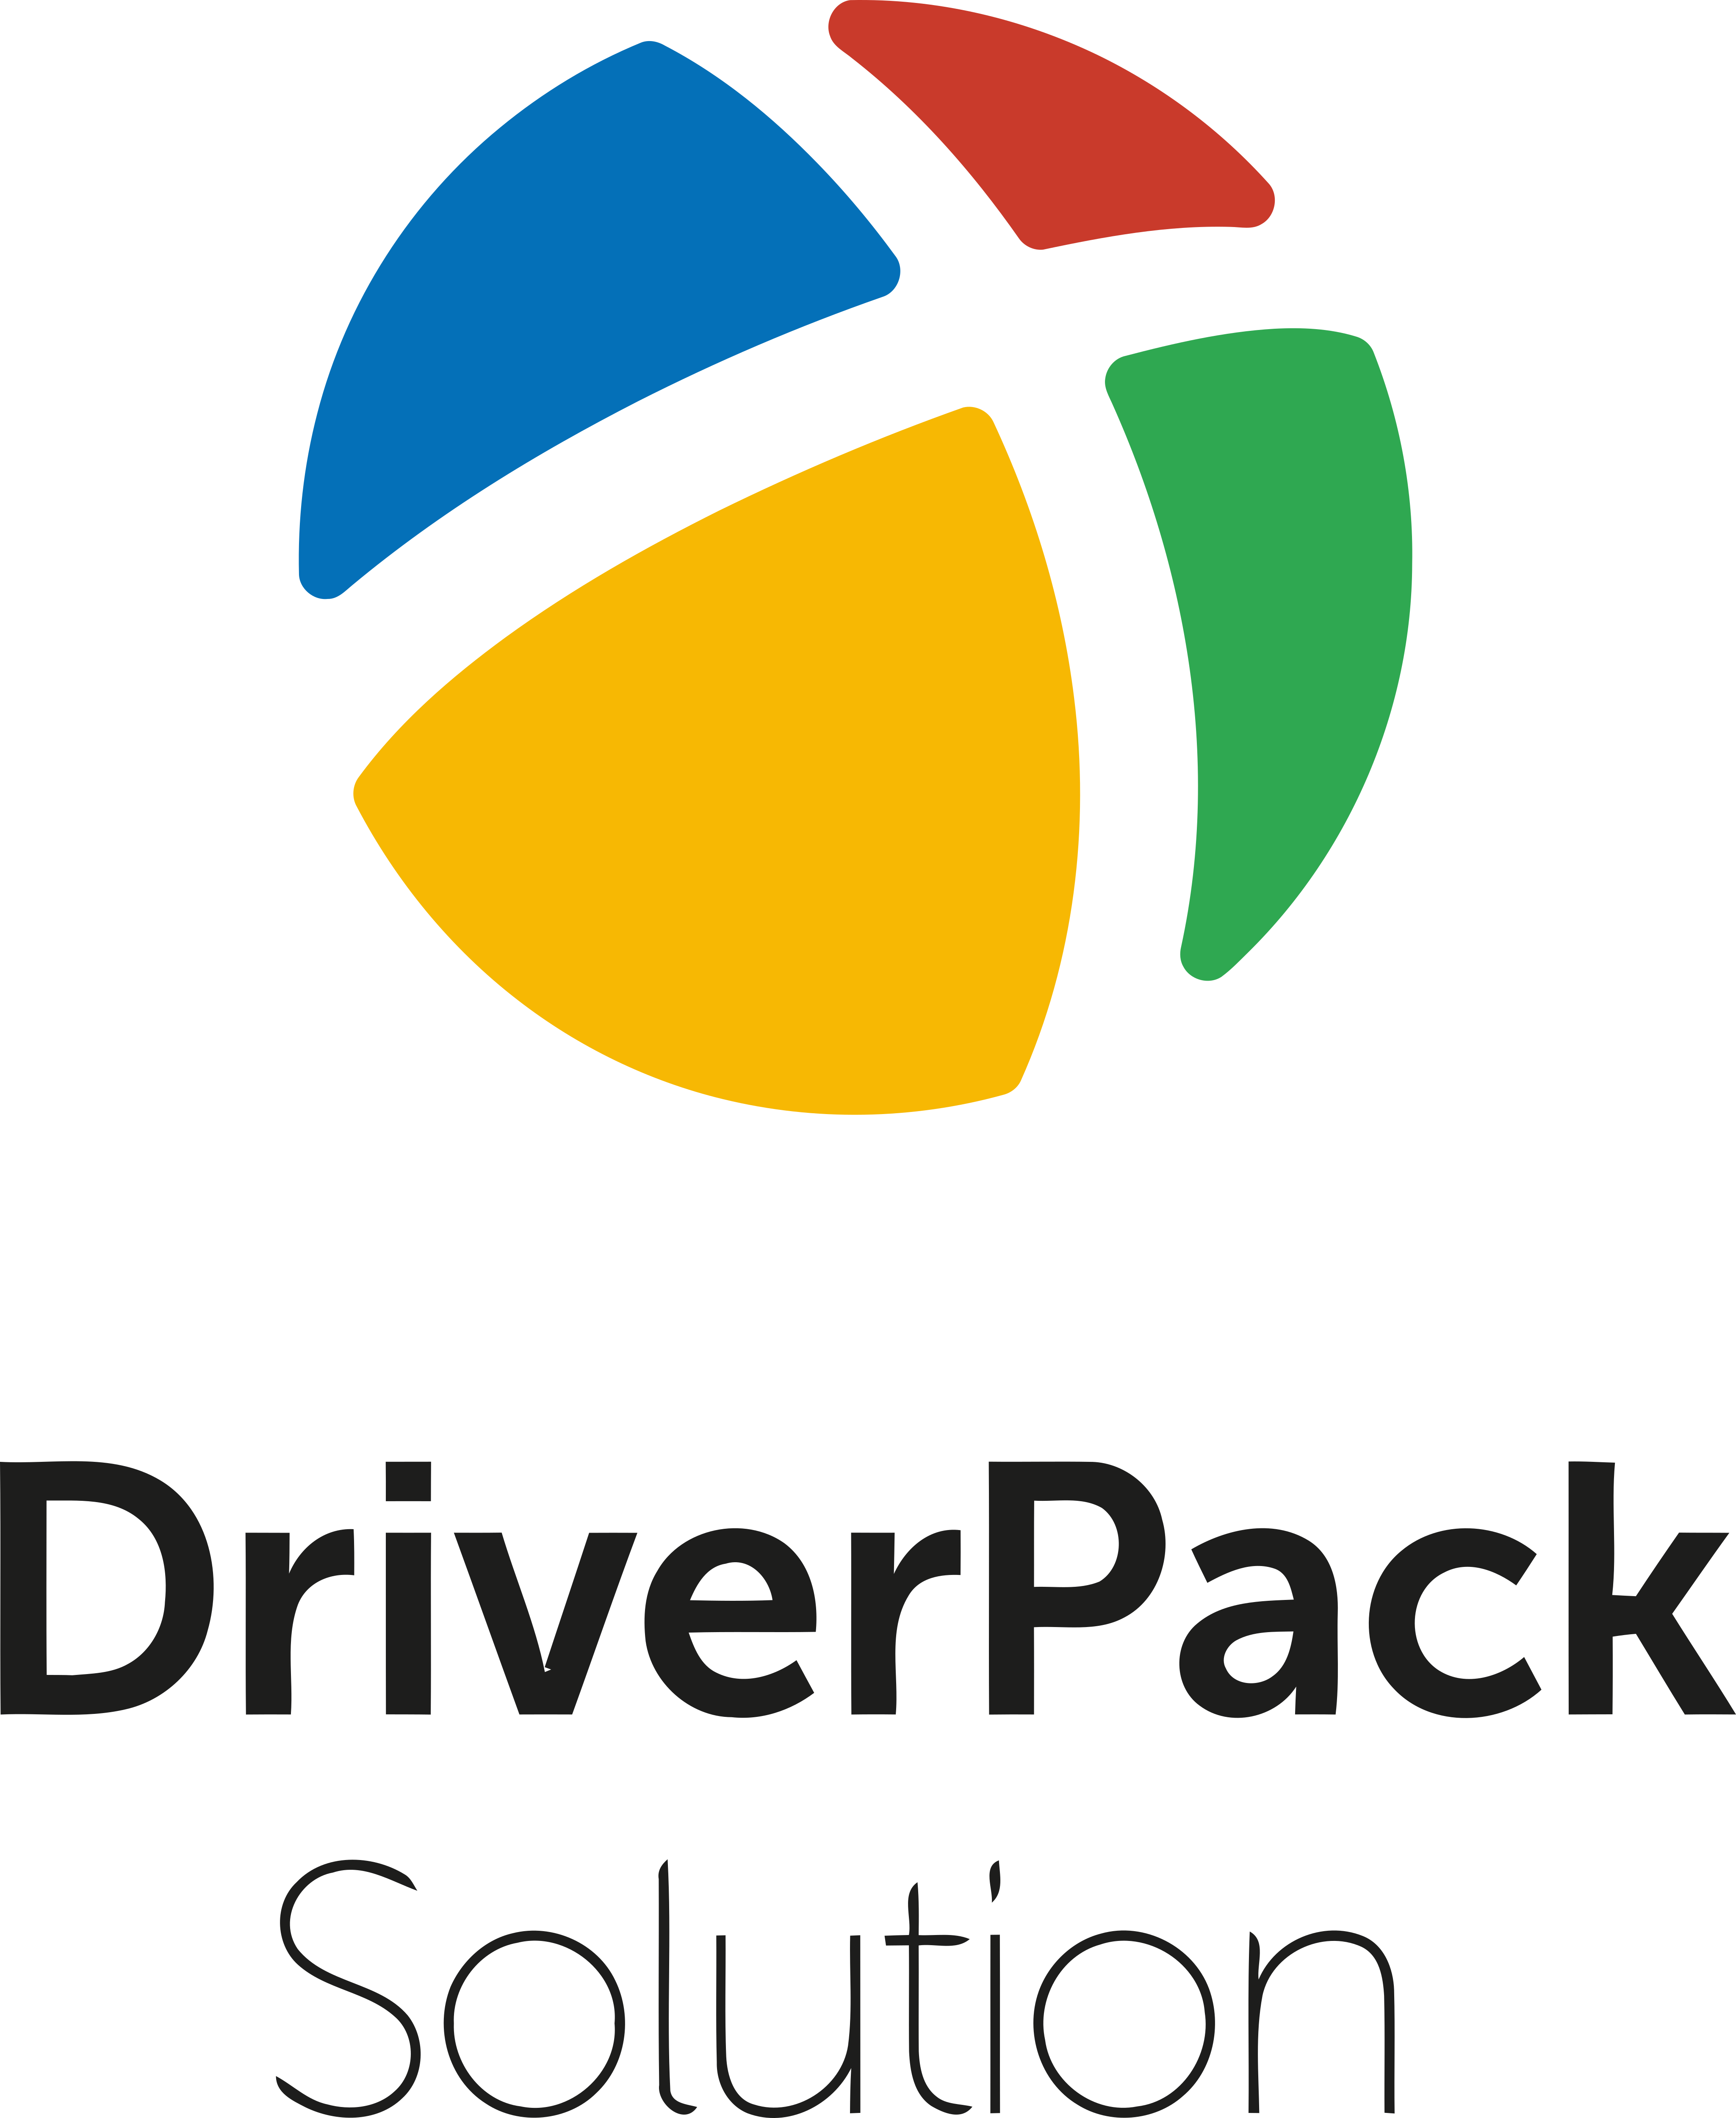 driverpack solution 16 kickass